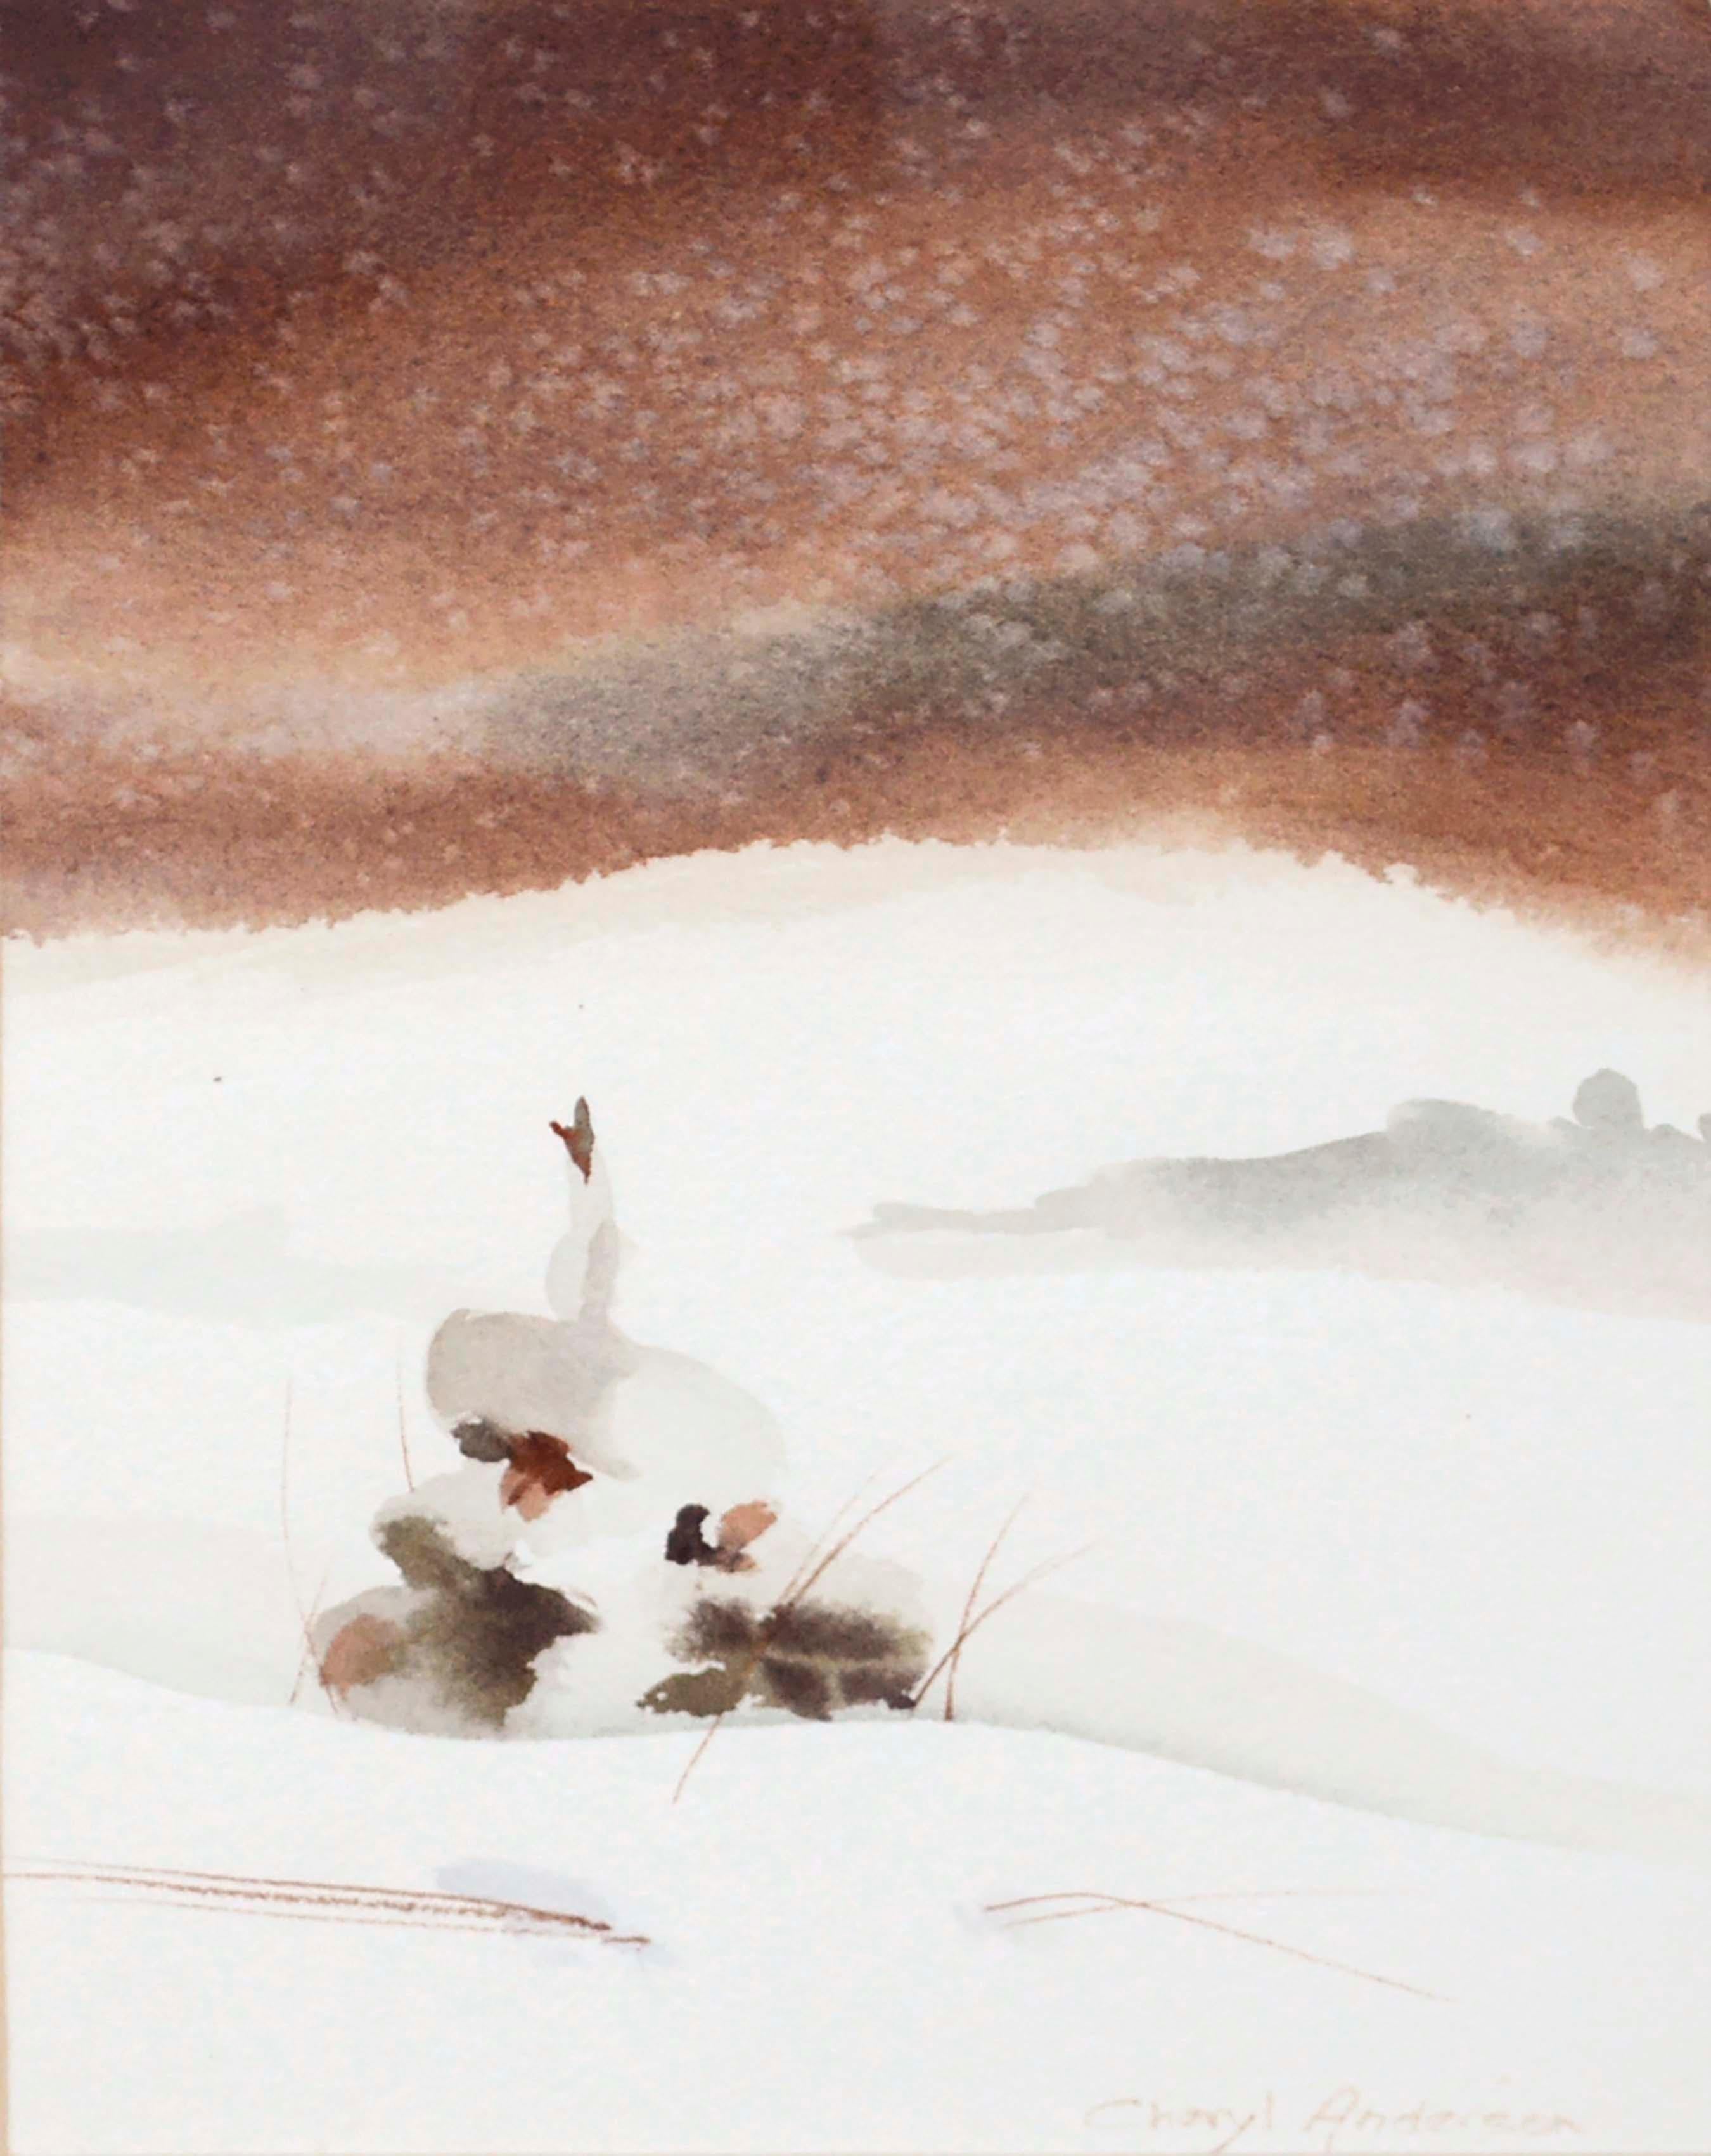 Cheryl Anderson Landscape Art - Snowy Pine - Minimal Winter Landscape 